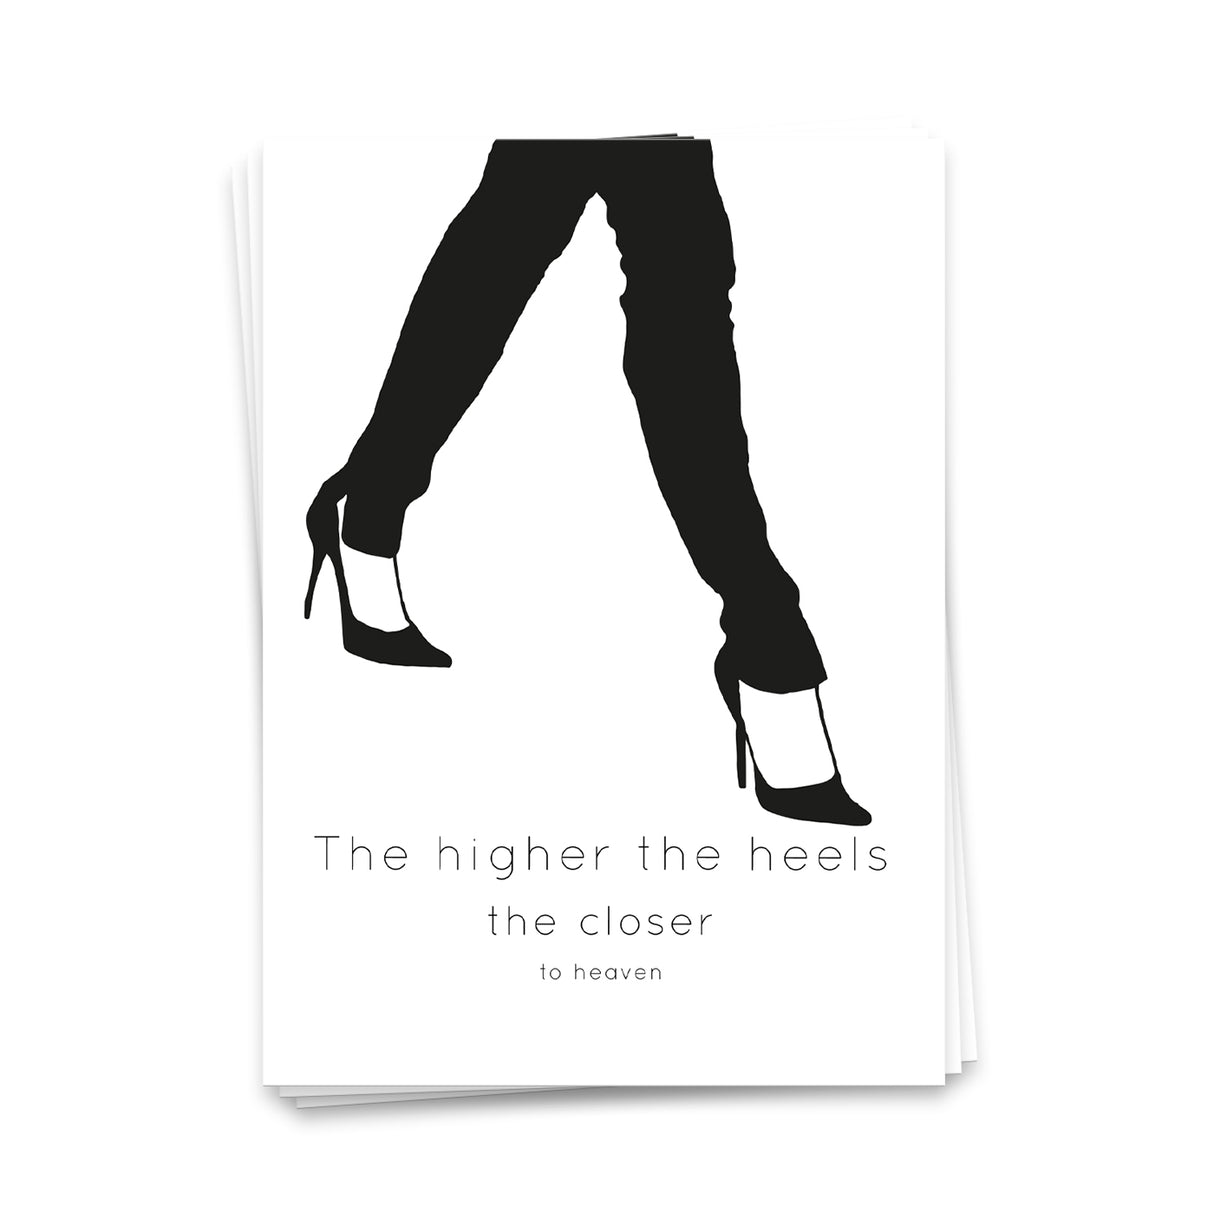 The higher the heels